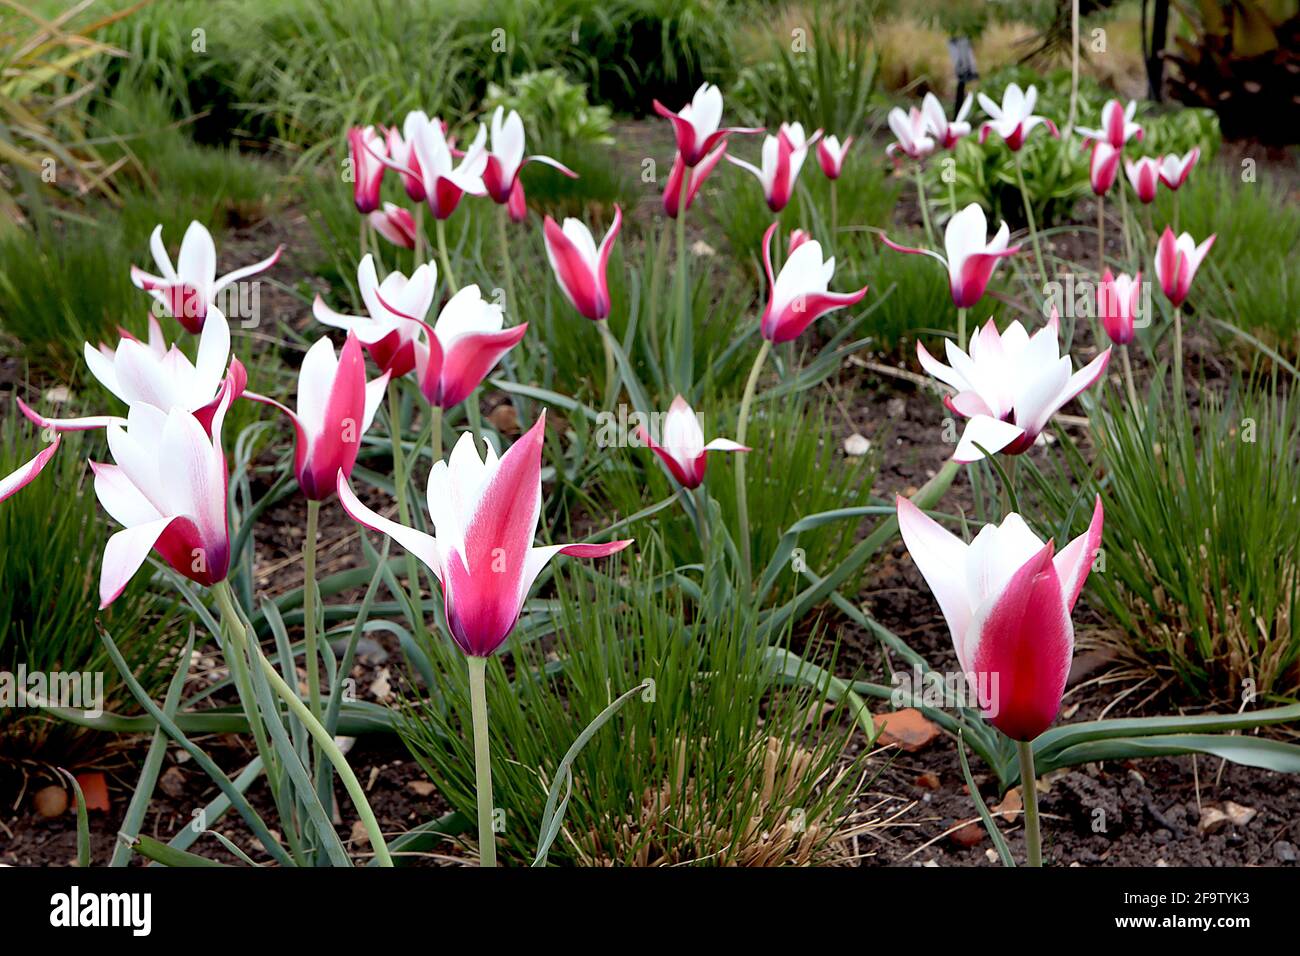 Tulipa clusiana ‘Peppermint Stick’  Species tulip 15 Peppermint Stick tulip - carmine red flowers, white edges, white inner petals, April, England, UK Stock Photo